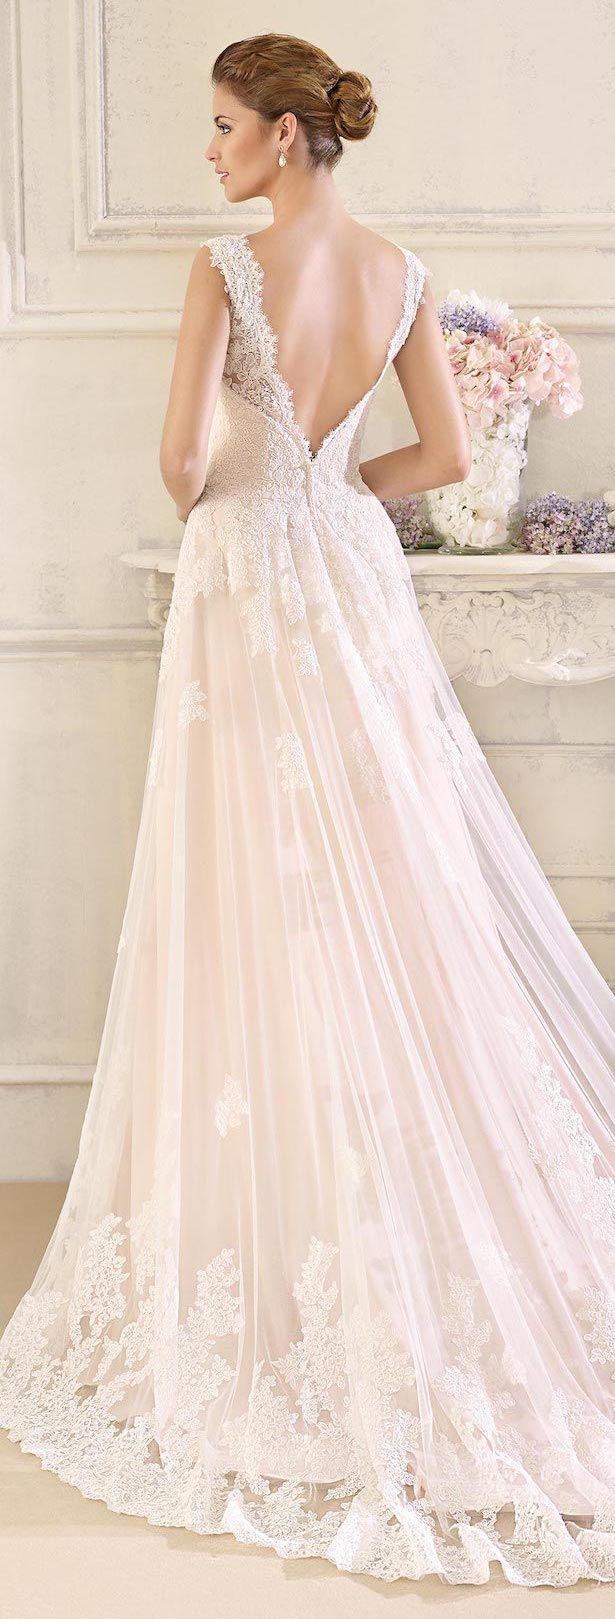 زفاف - Wedding Dresses By Fara Sposa 2017 Bridal Collection